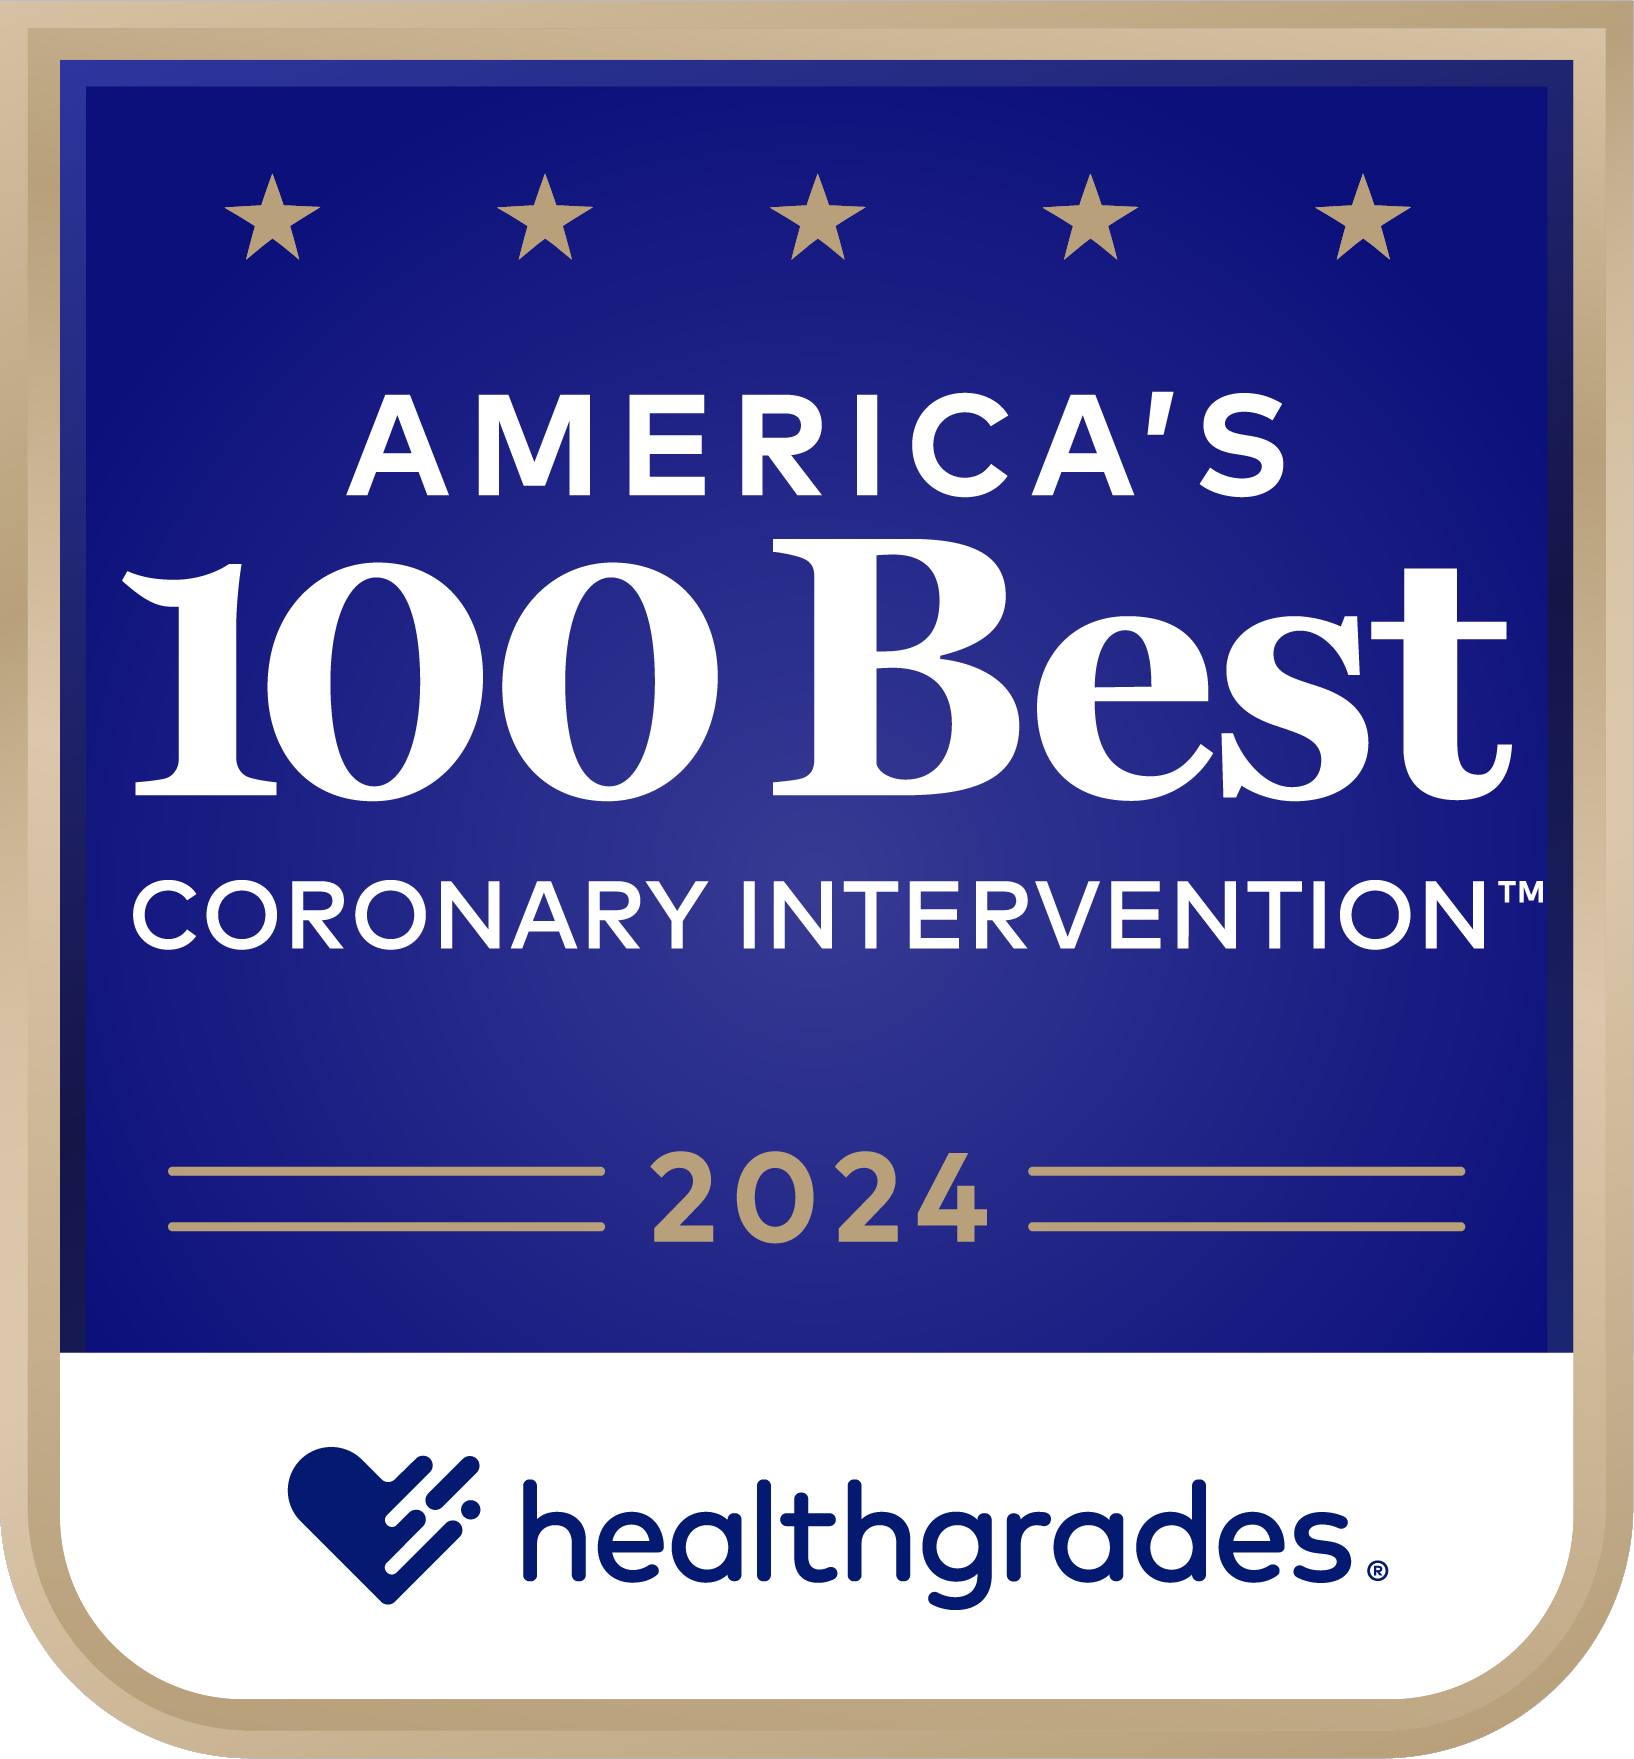 100 Best Coronary Intervention Healthgrades